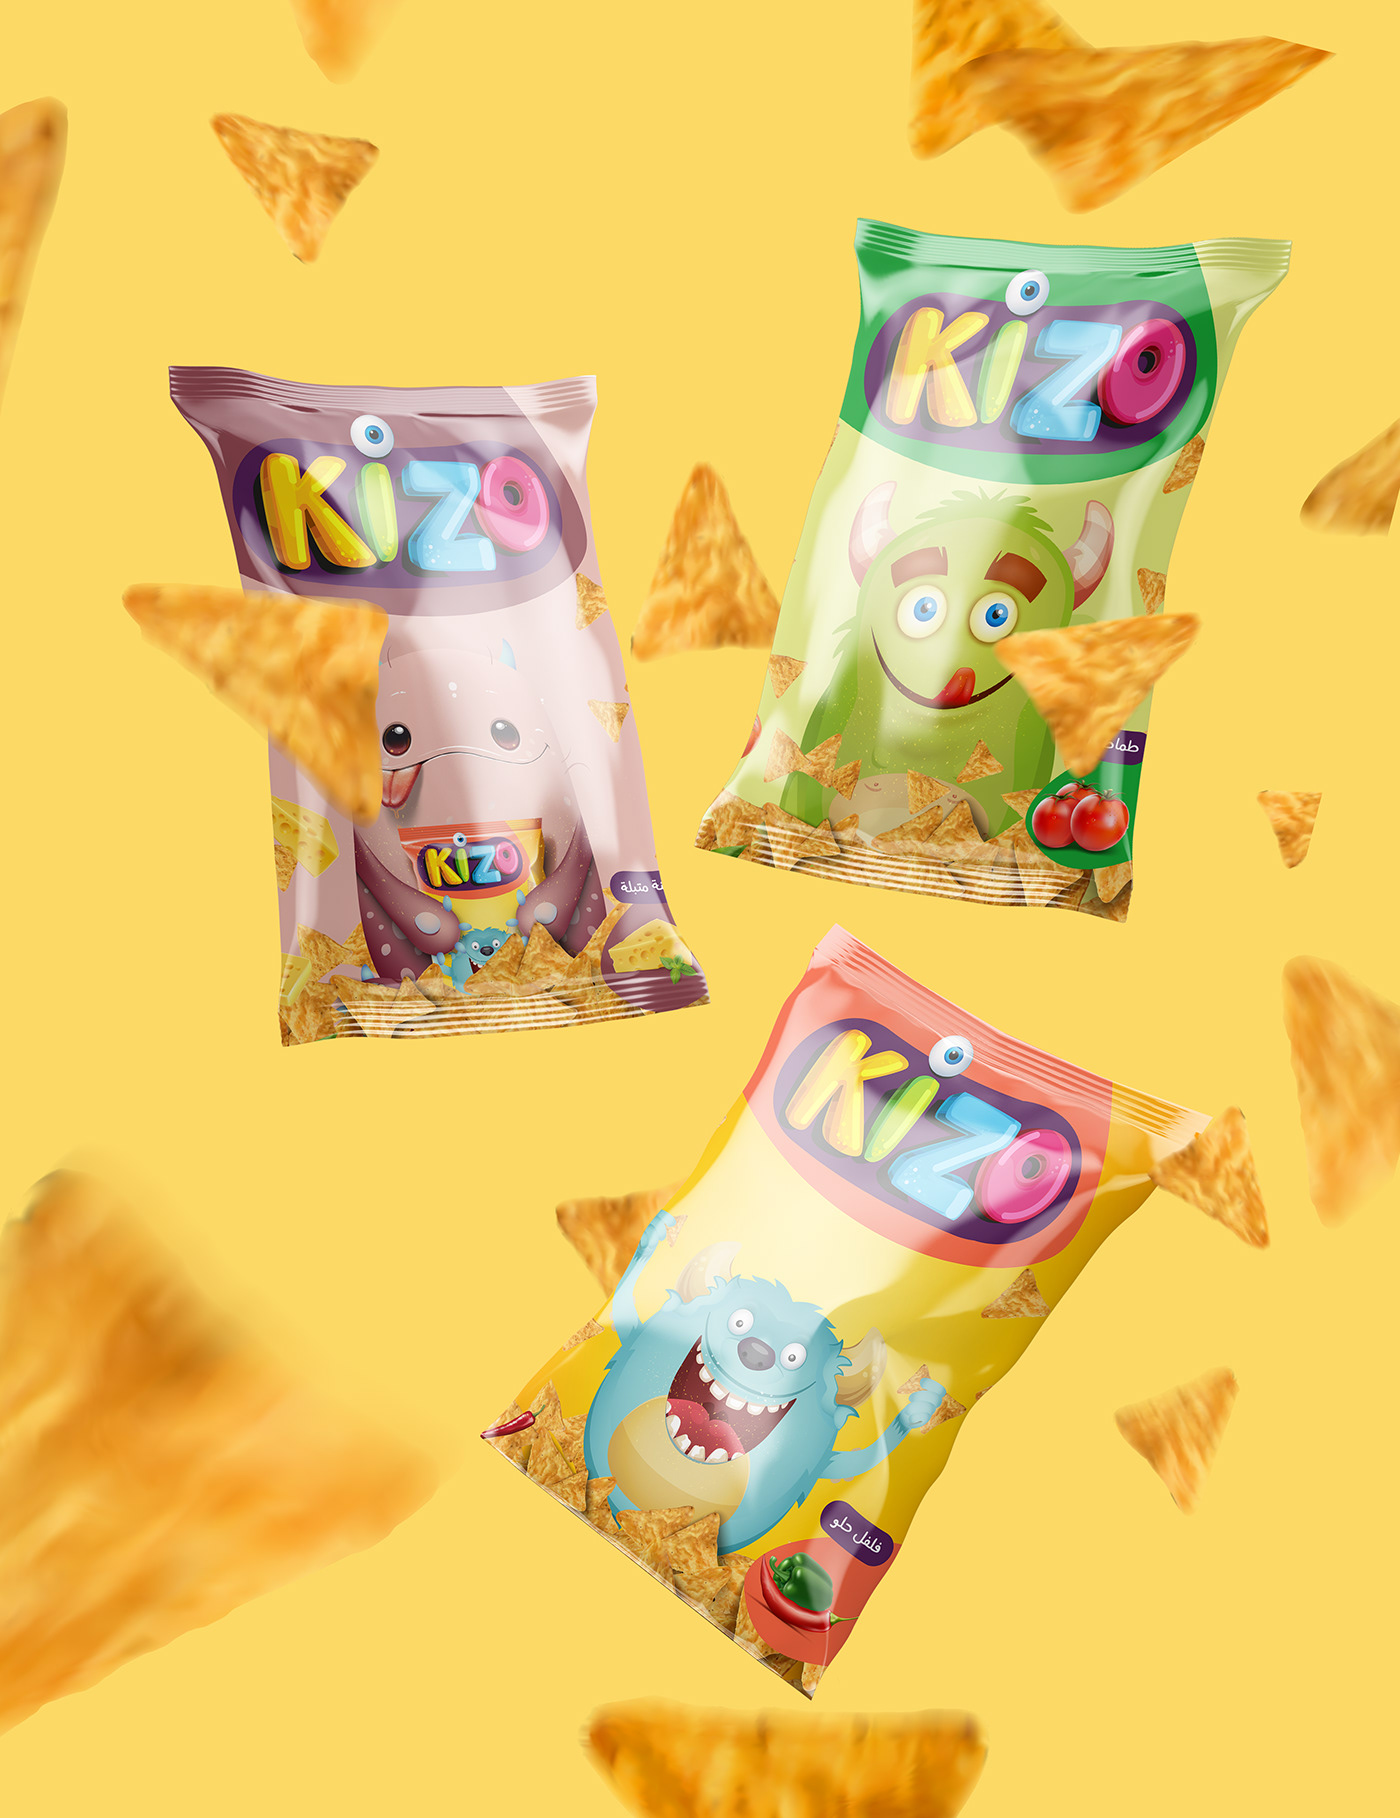 Character illustrator on ipad Packaging photoshop on ipad chips corn monsters yummy